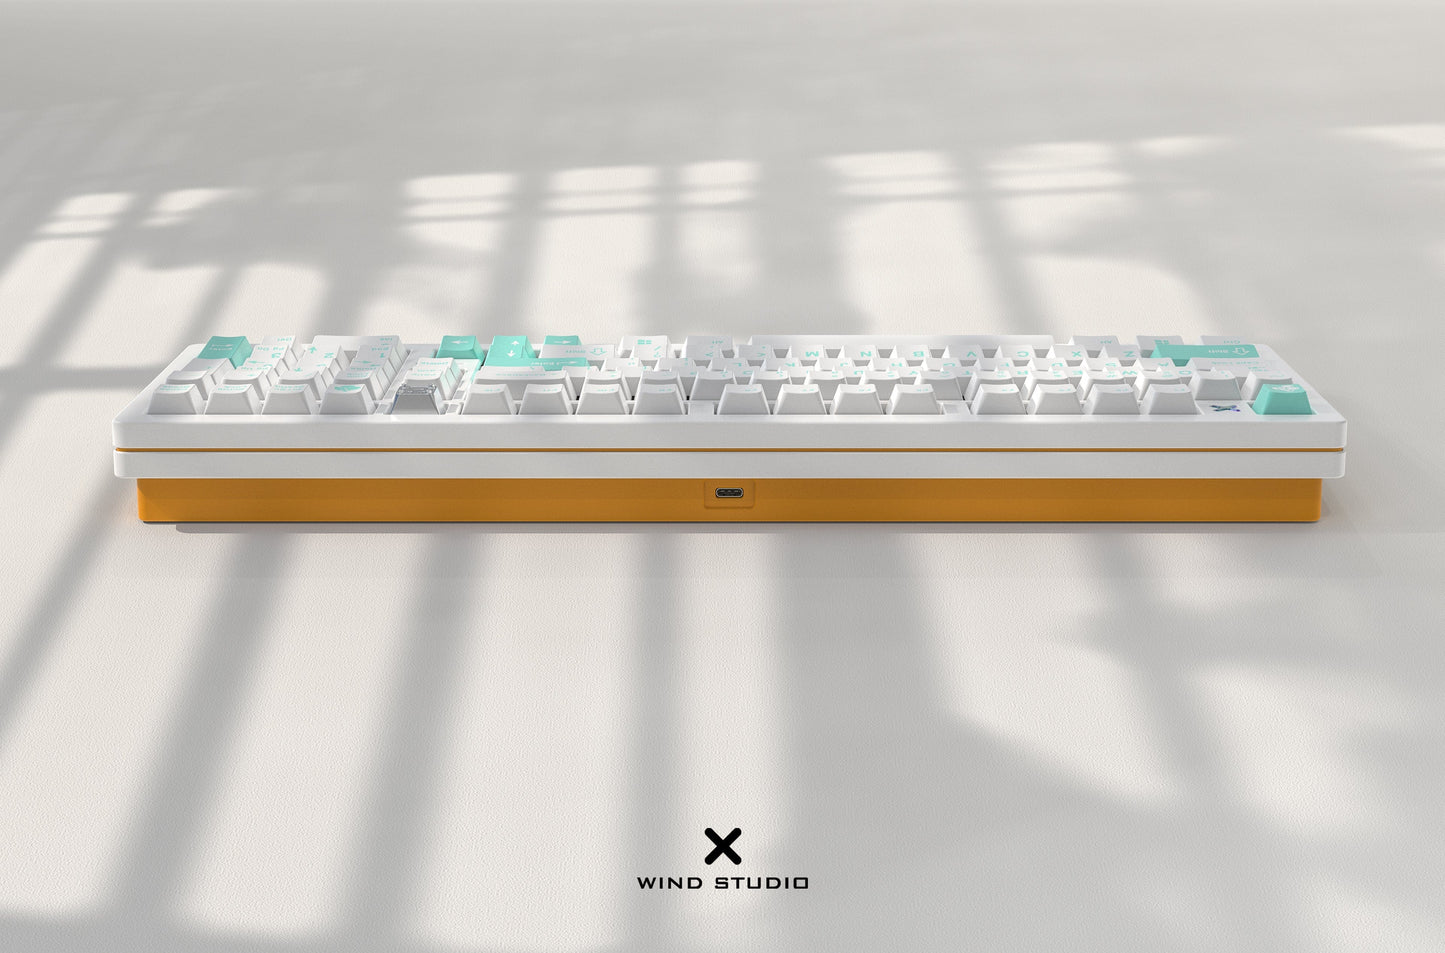 windstudio Wind x98 Keyboard kit